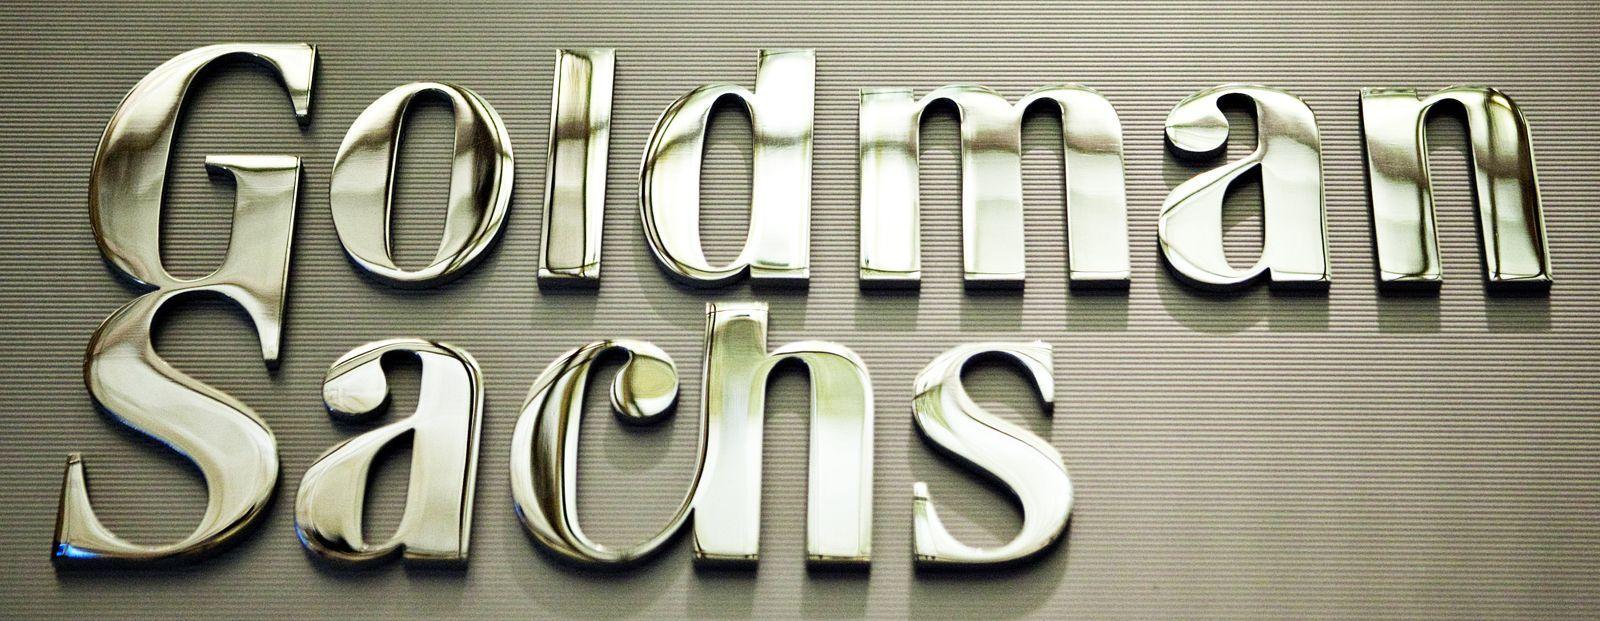 Goldman Sachs Logo - Goldman Sachs Logo history | All logos world | Goldman sachs ...